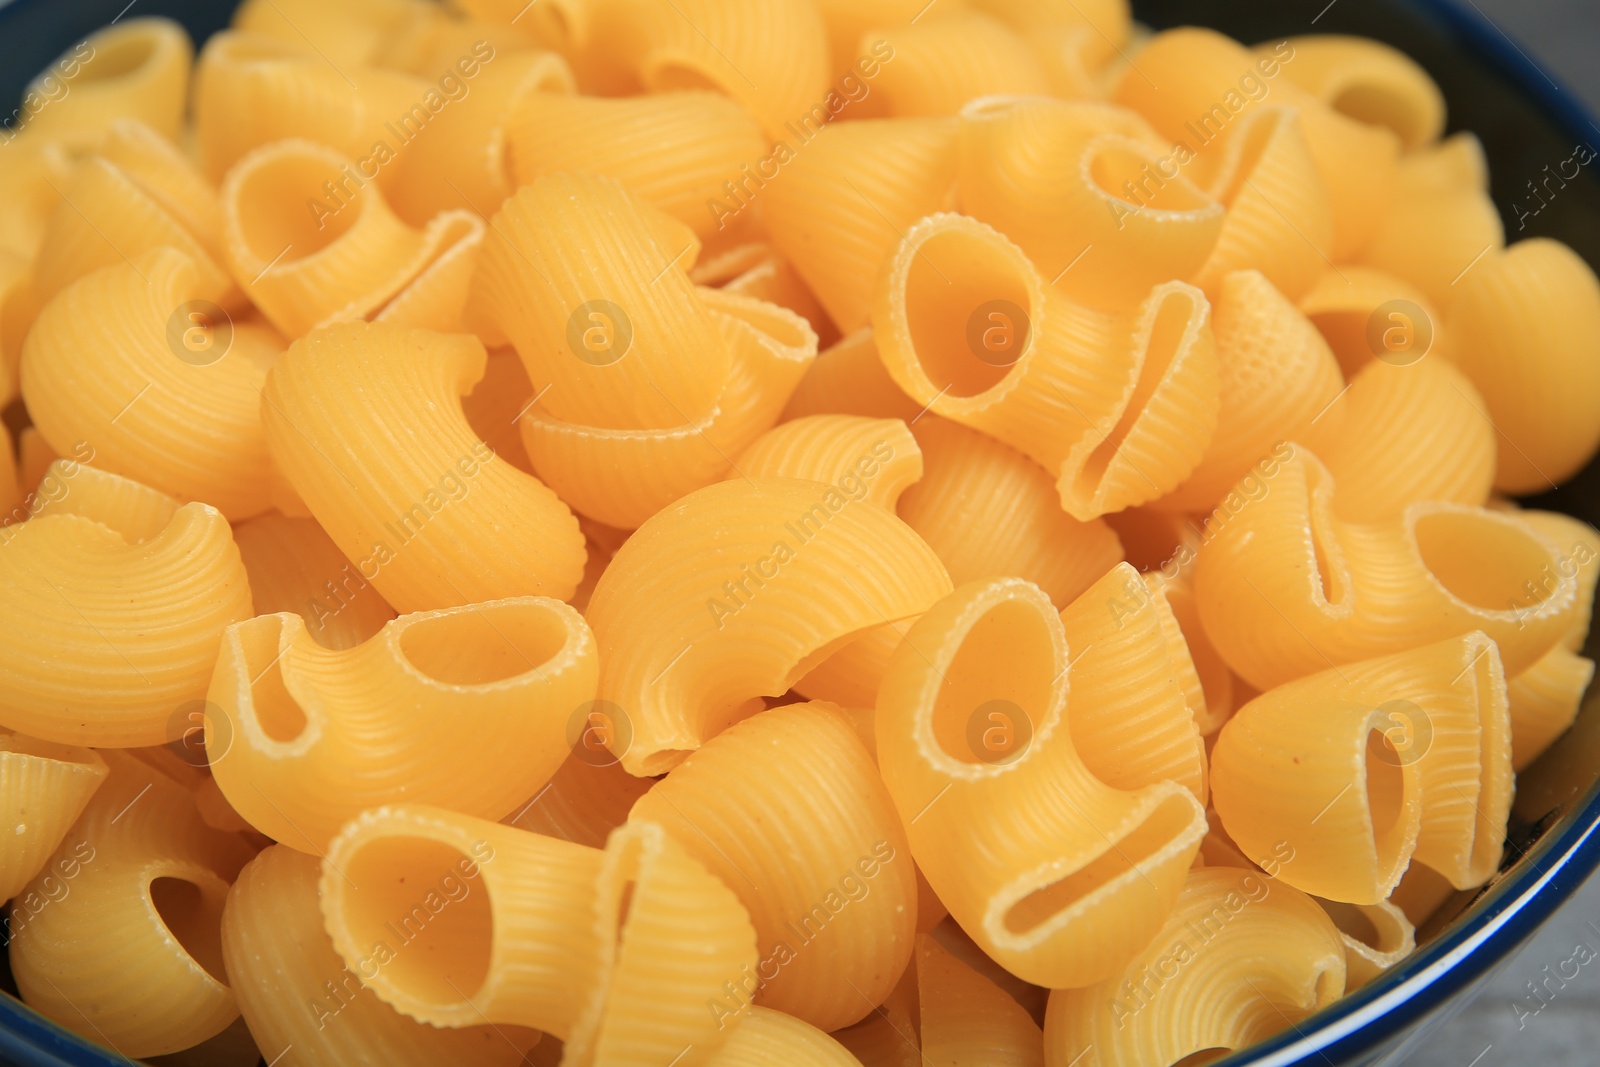 Photo of Raw macaroni pasta in bowl, closeup view